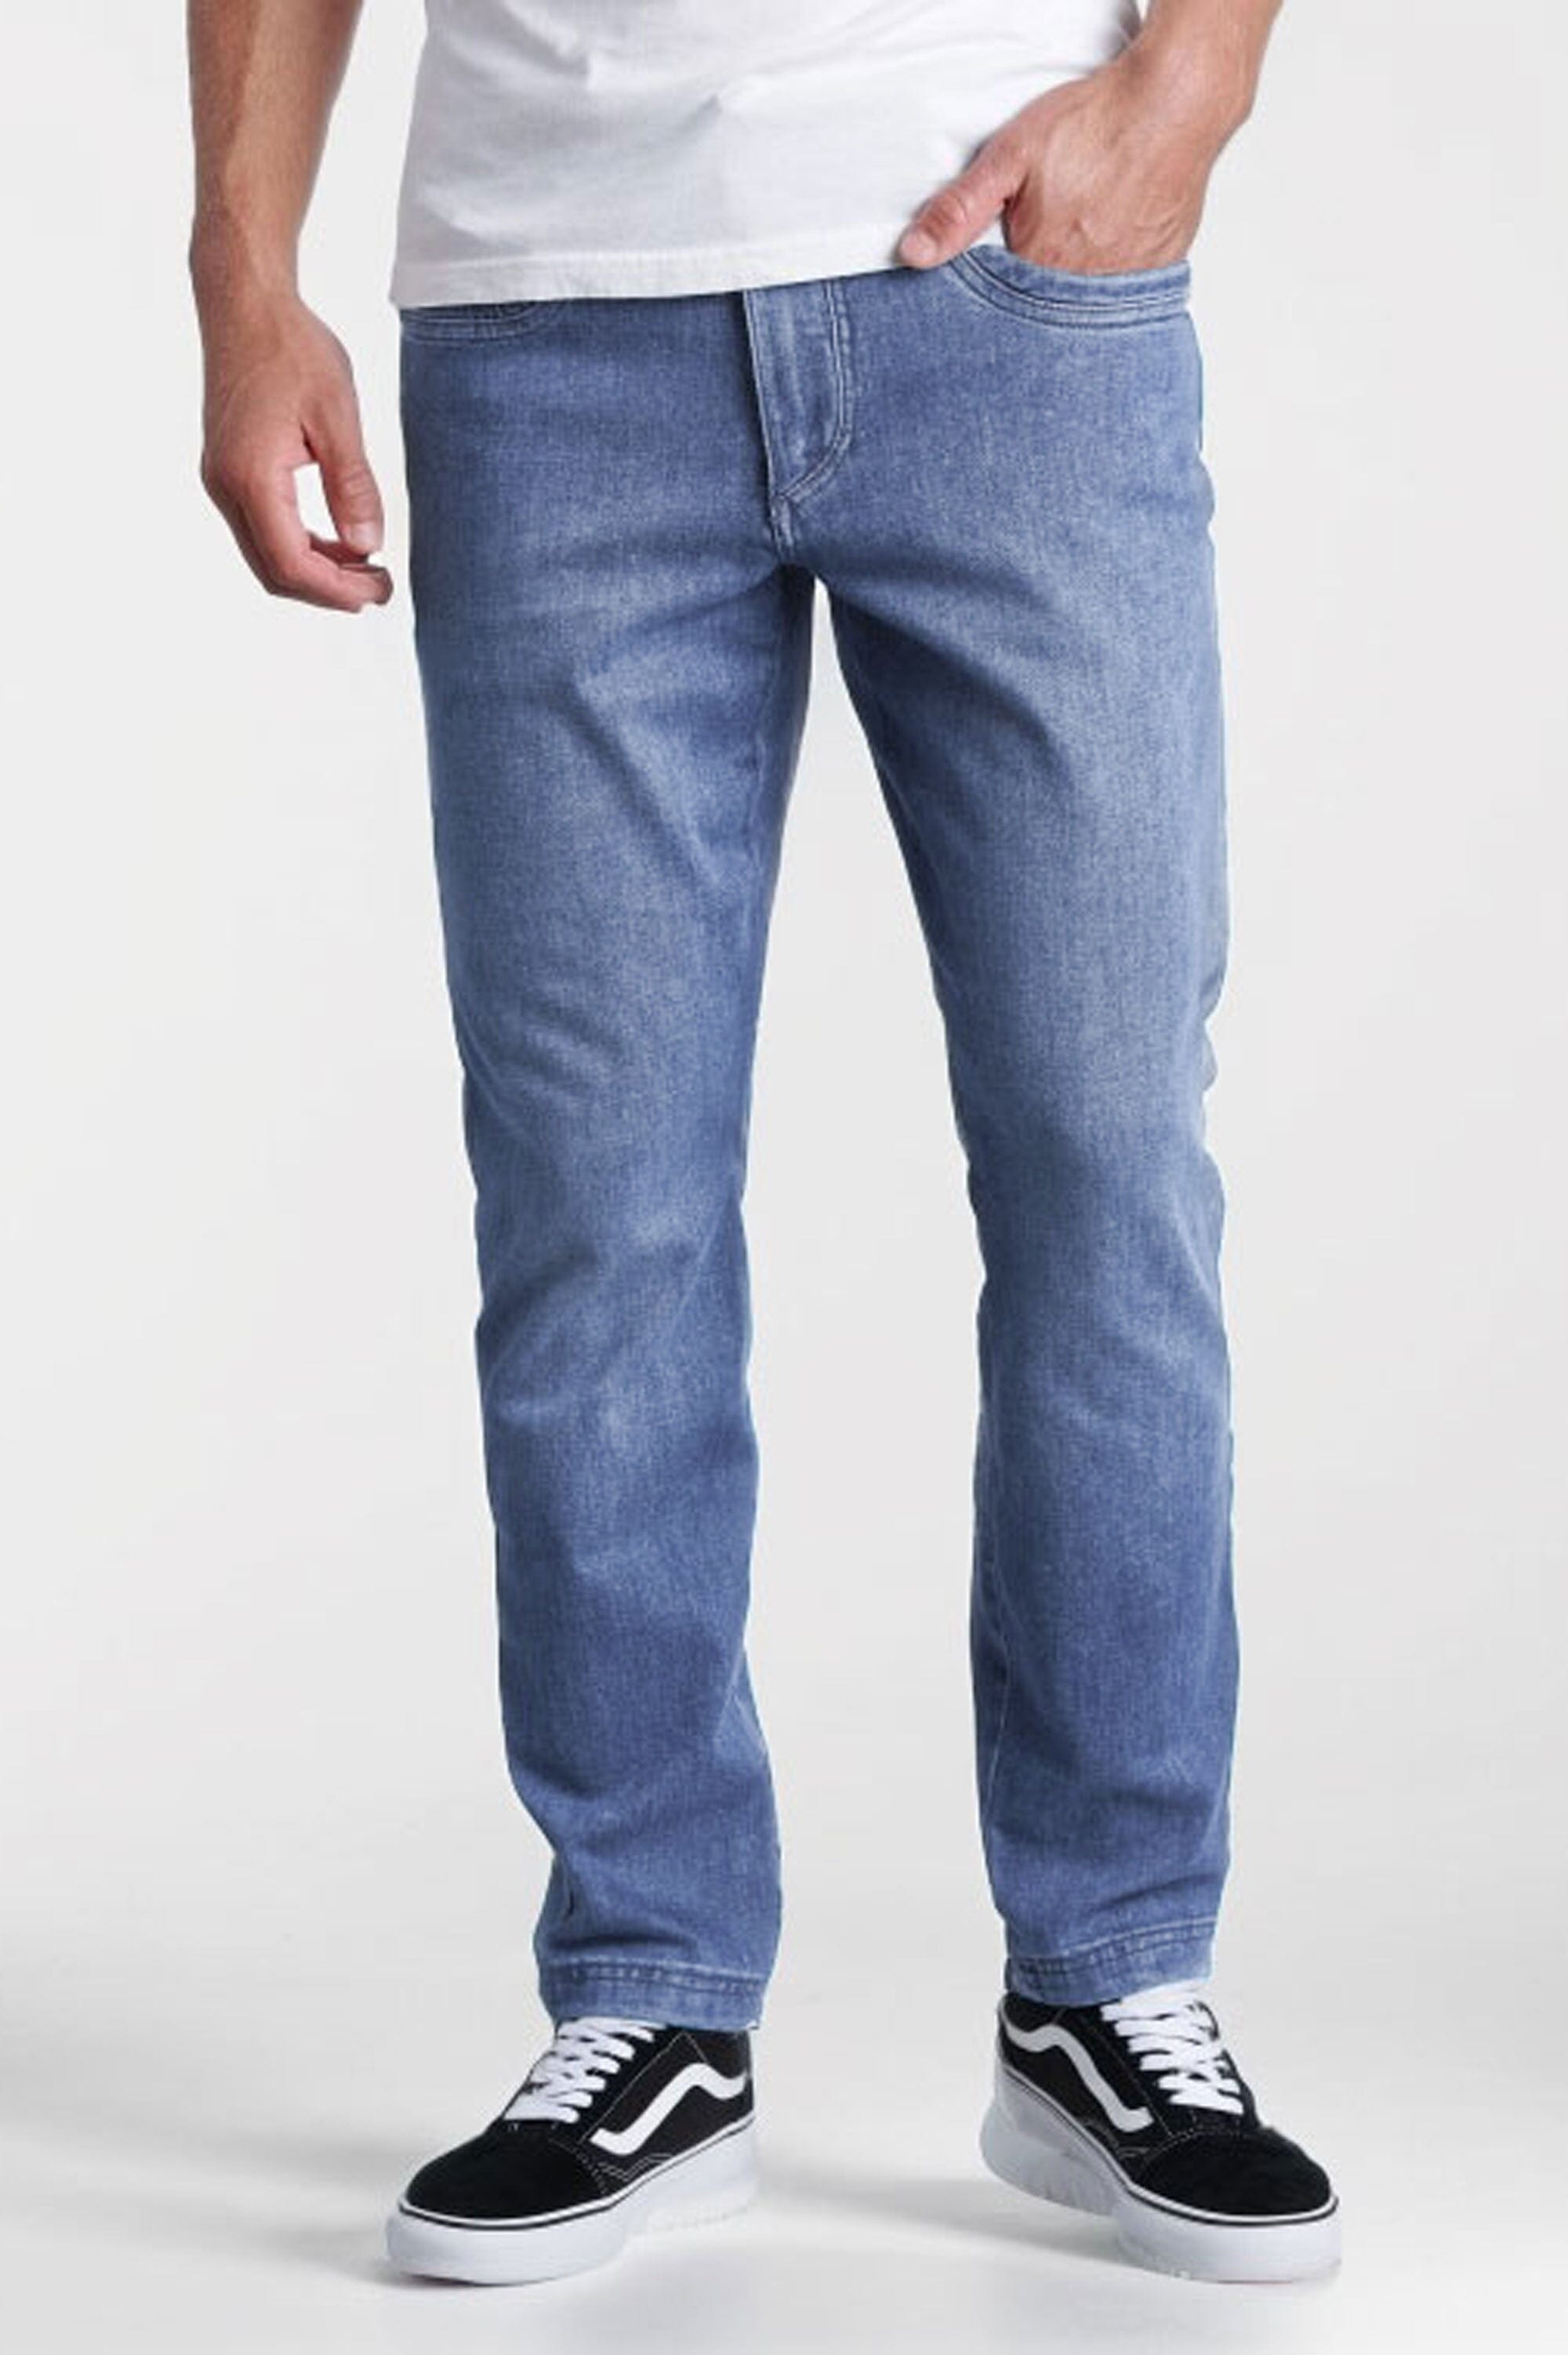 Buy Latest Denim Jeans For Men Online | SNITCH